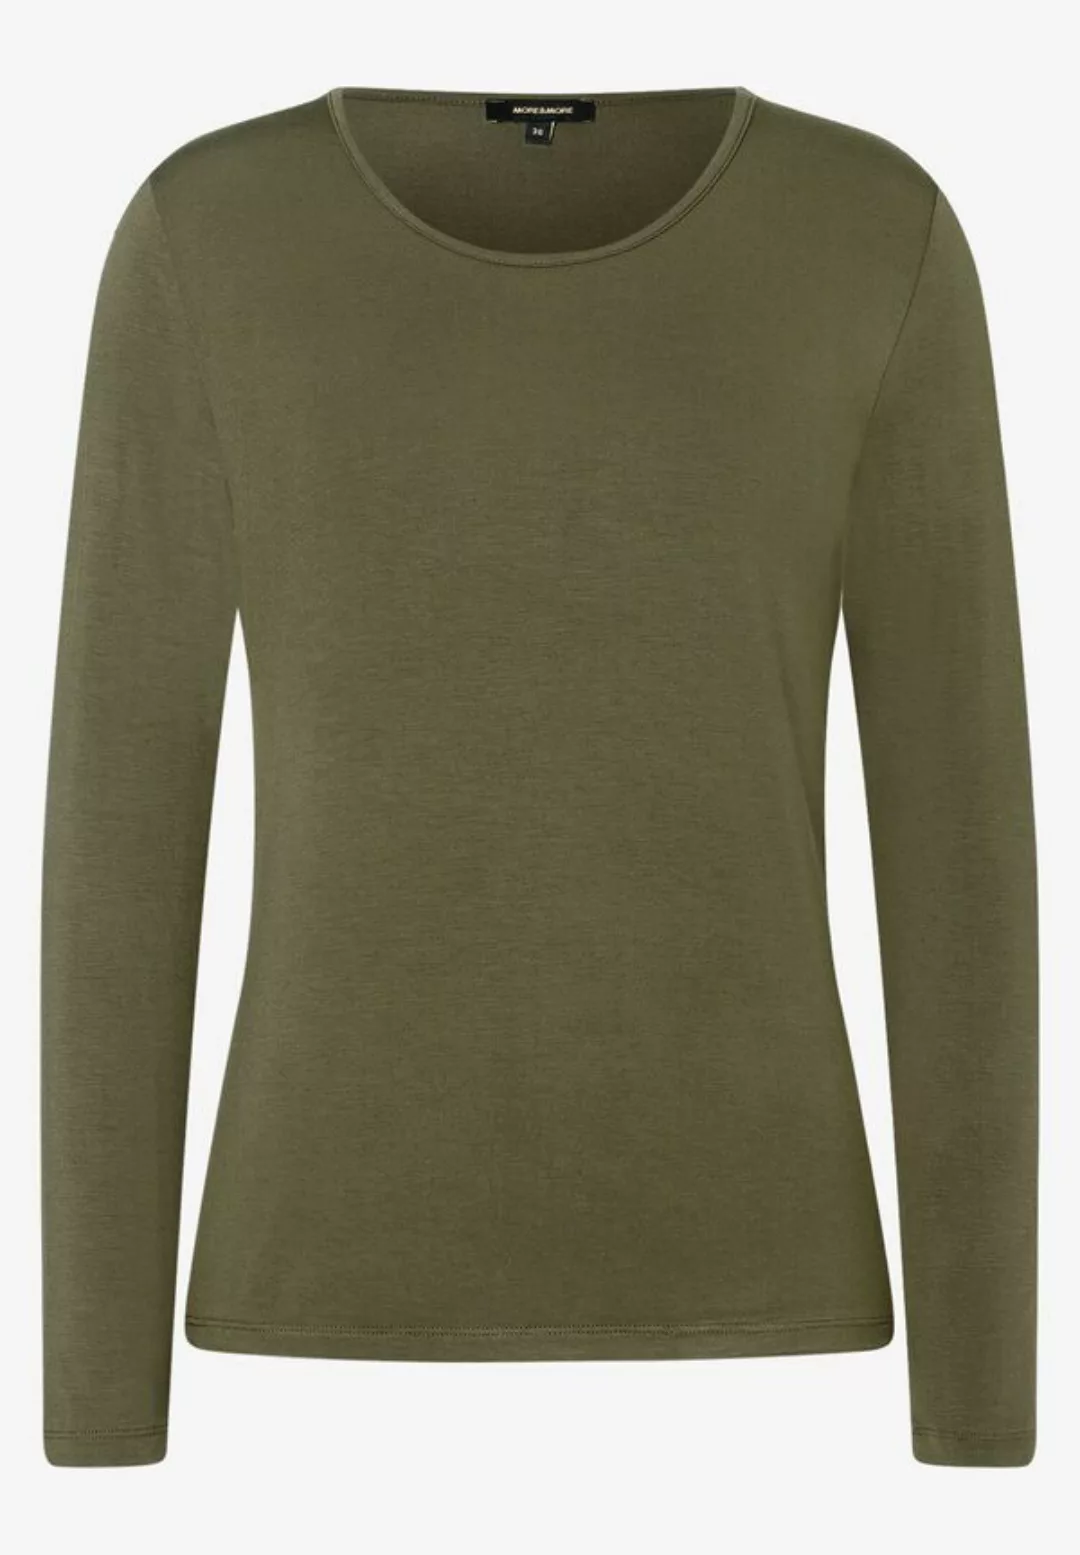 Langarm-T-Shirt, dunkelgrün, Winter-Kollektion günstig online kaufen